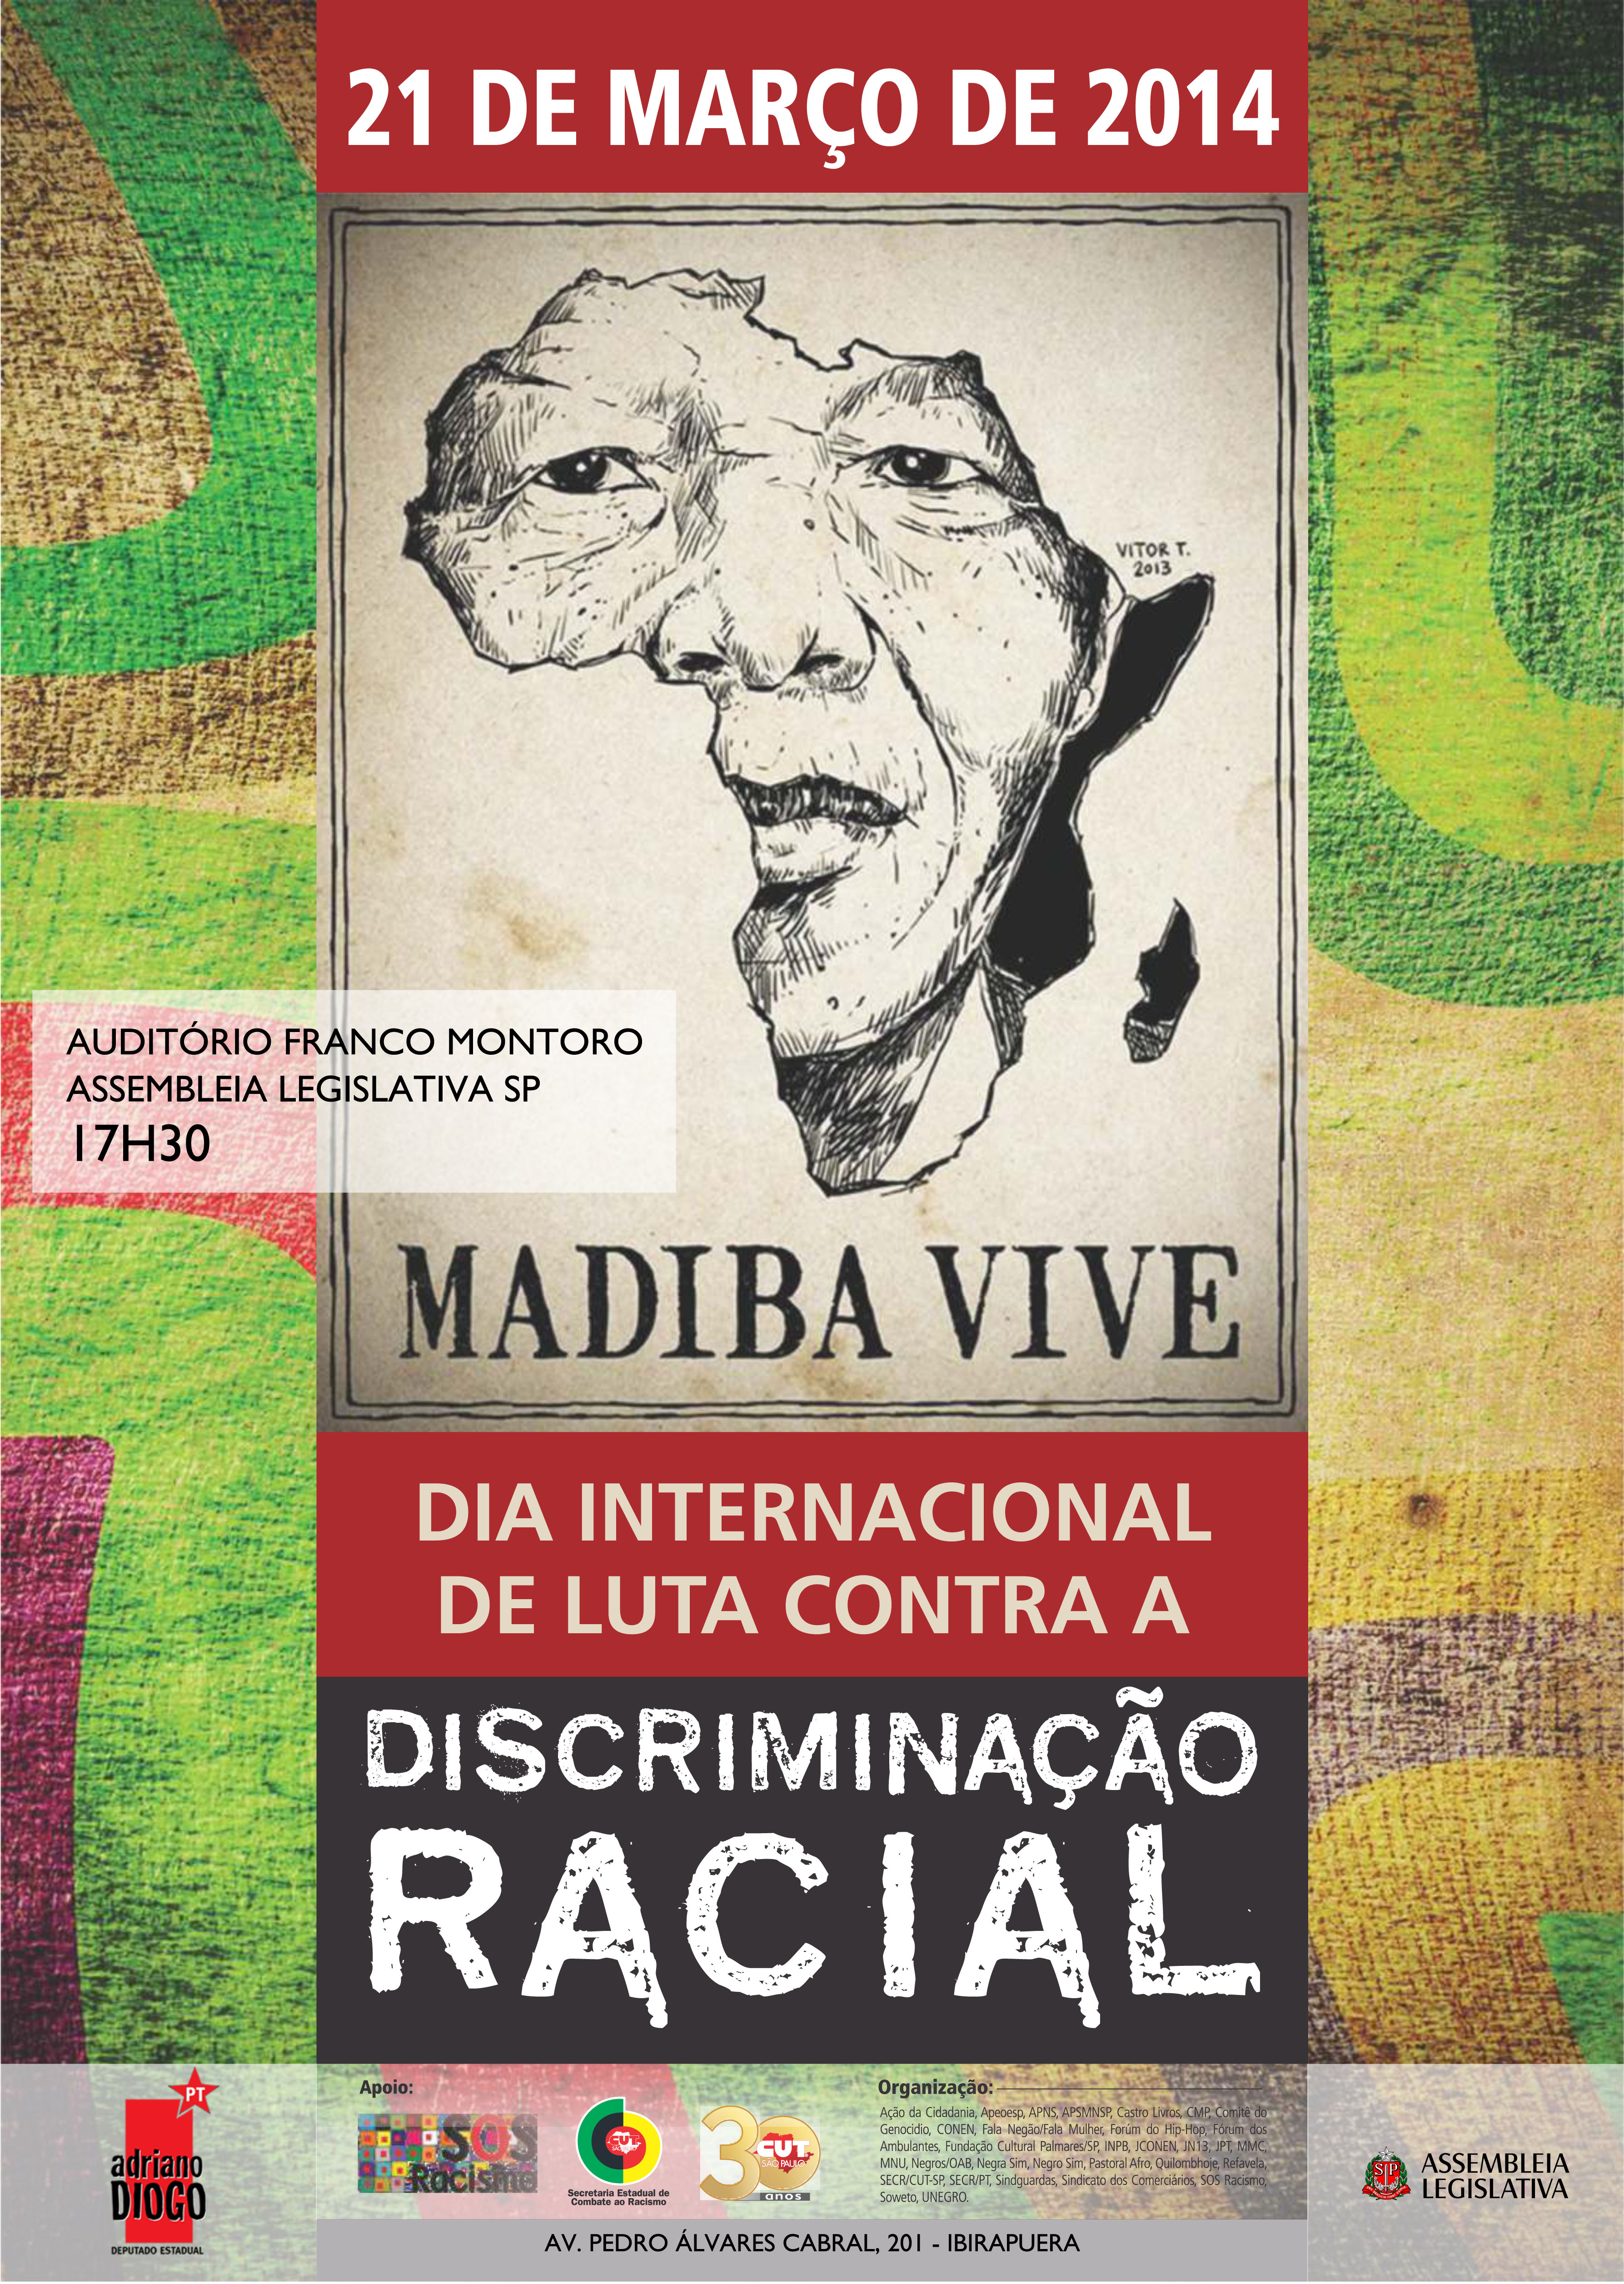 Dia Internacional de Luta contra a Discriminao Racial - Madiba vive<a style='float:right;color:#ccc' href='https://www3.al.sp.gov.br/repositorio/noticia/N-03-2014/fg159695.jpg' target=_blank><i class='bi bi-zoom-in'></i> Clique para ver a imagem </a>